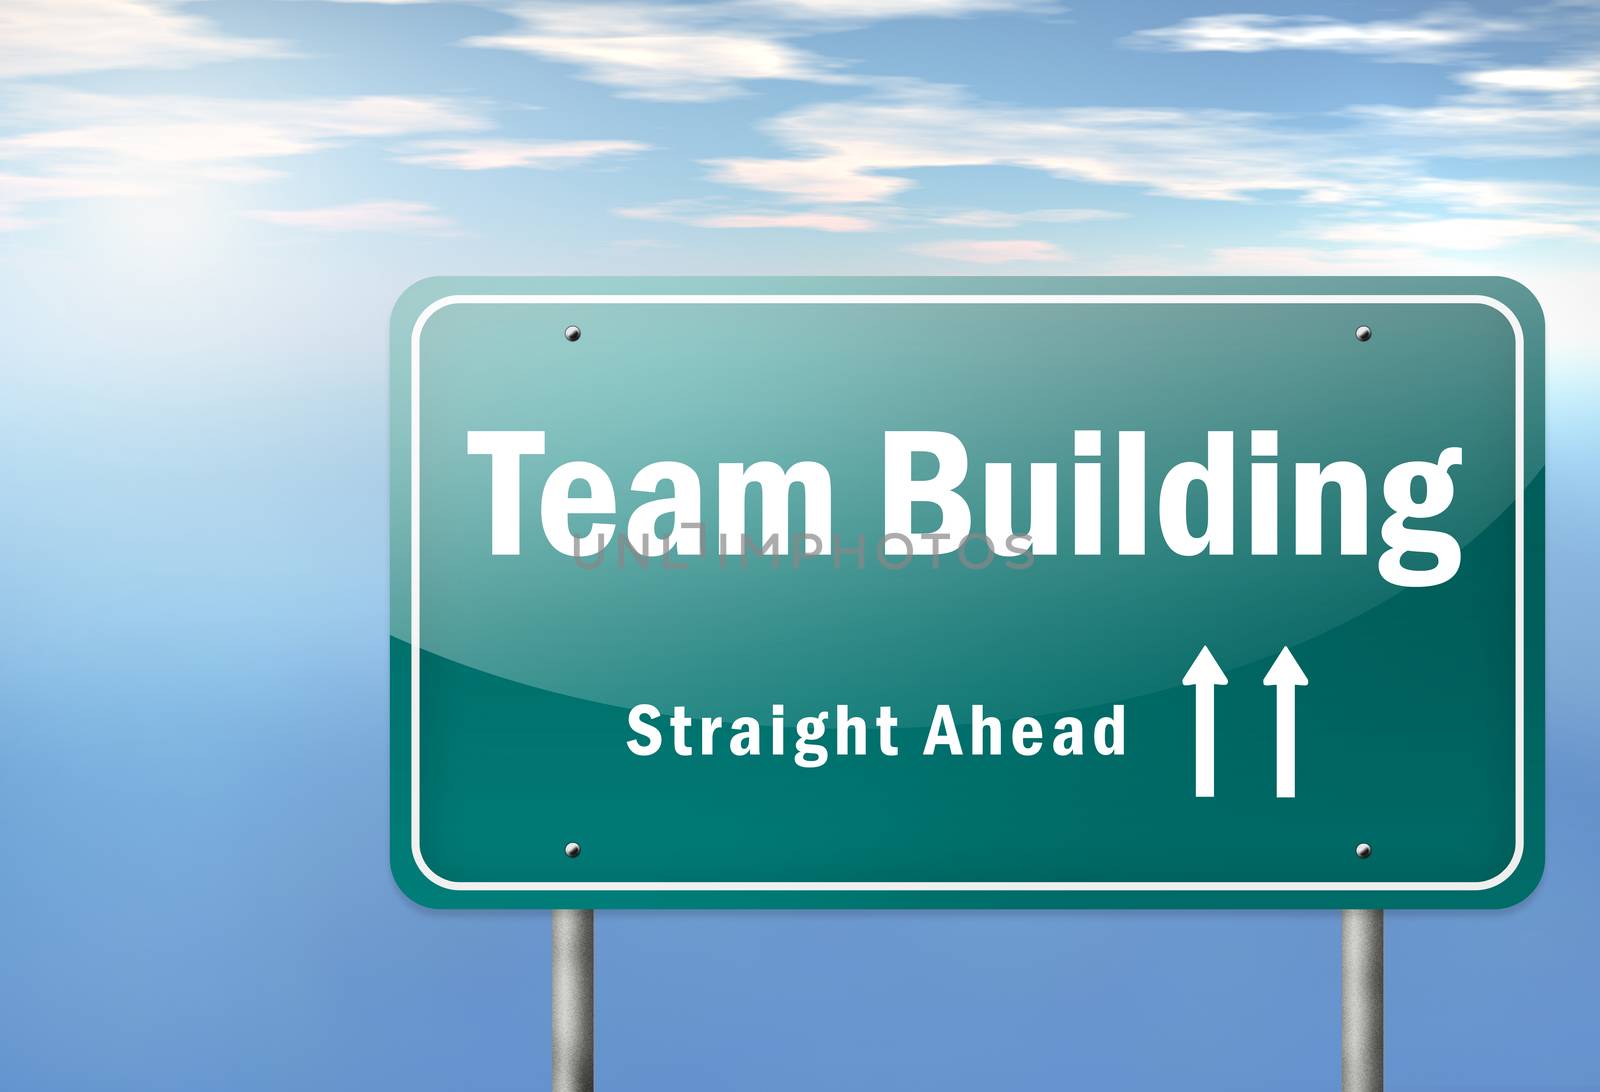 Highway Signpost "Team Building" by mindscanner